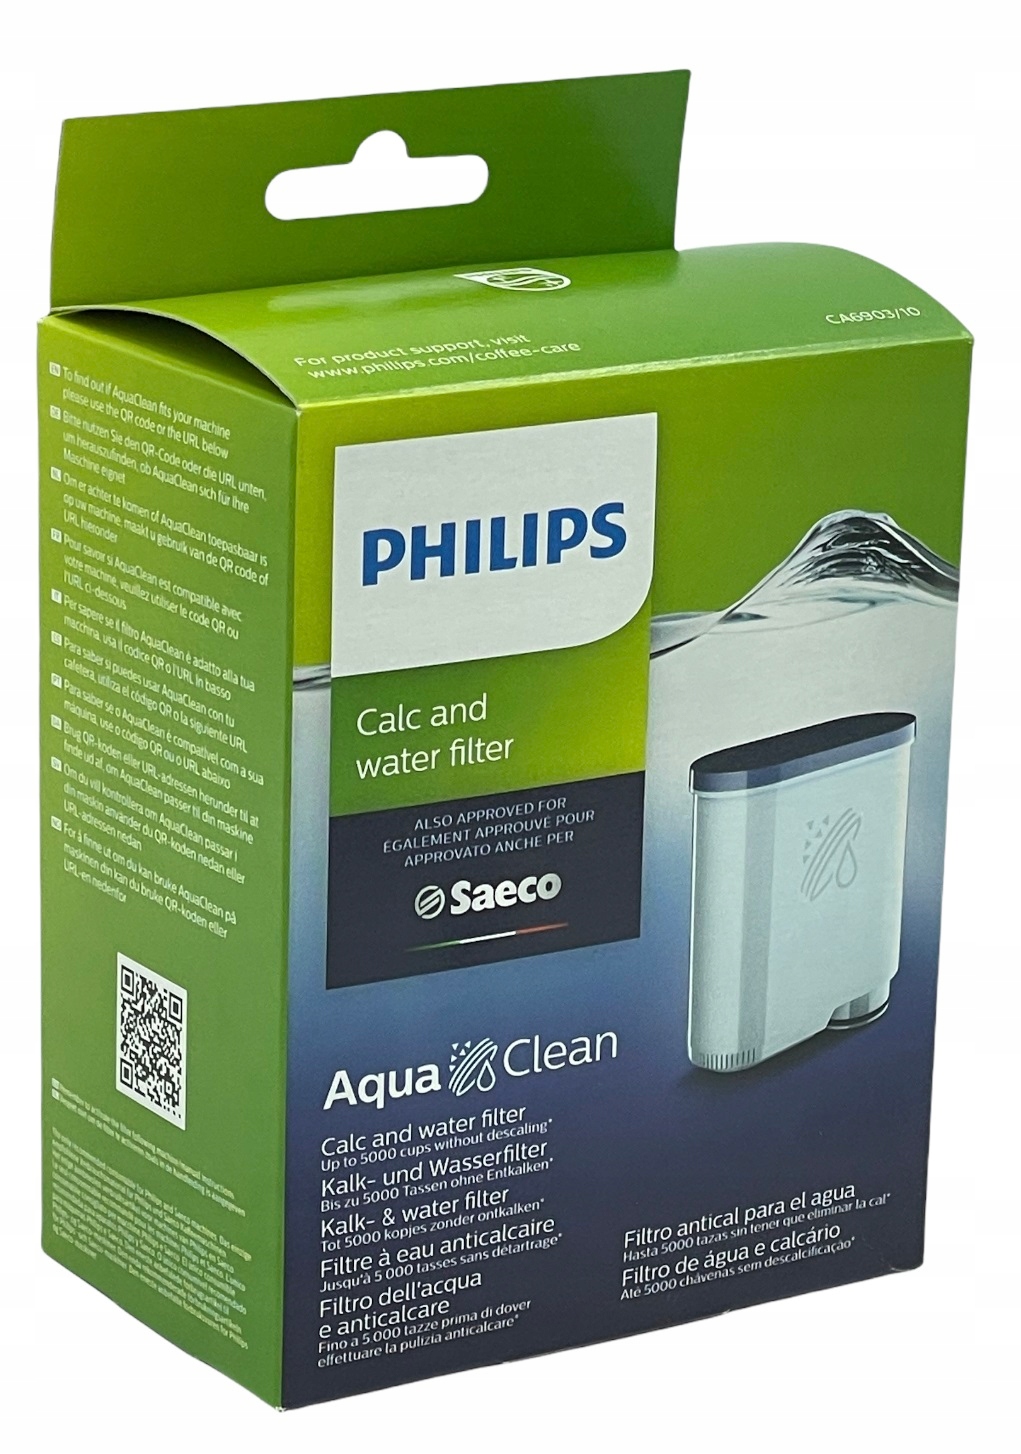 Kit de limpieza para la cafetera Philips Saeco AquaClean CA6903/10